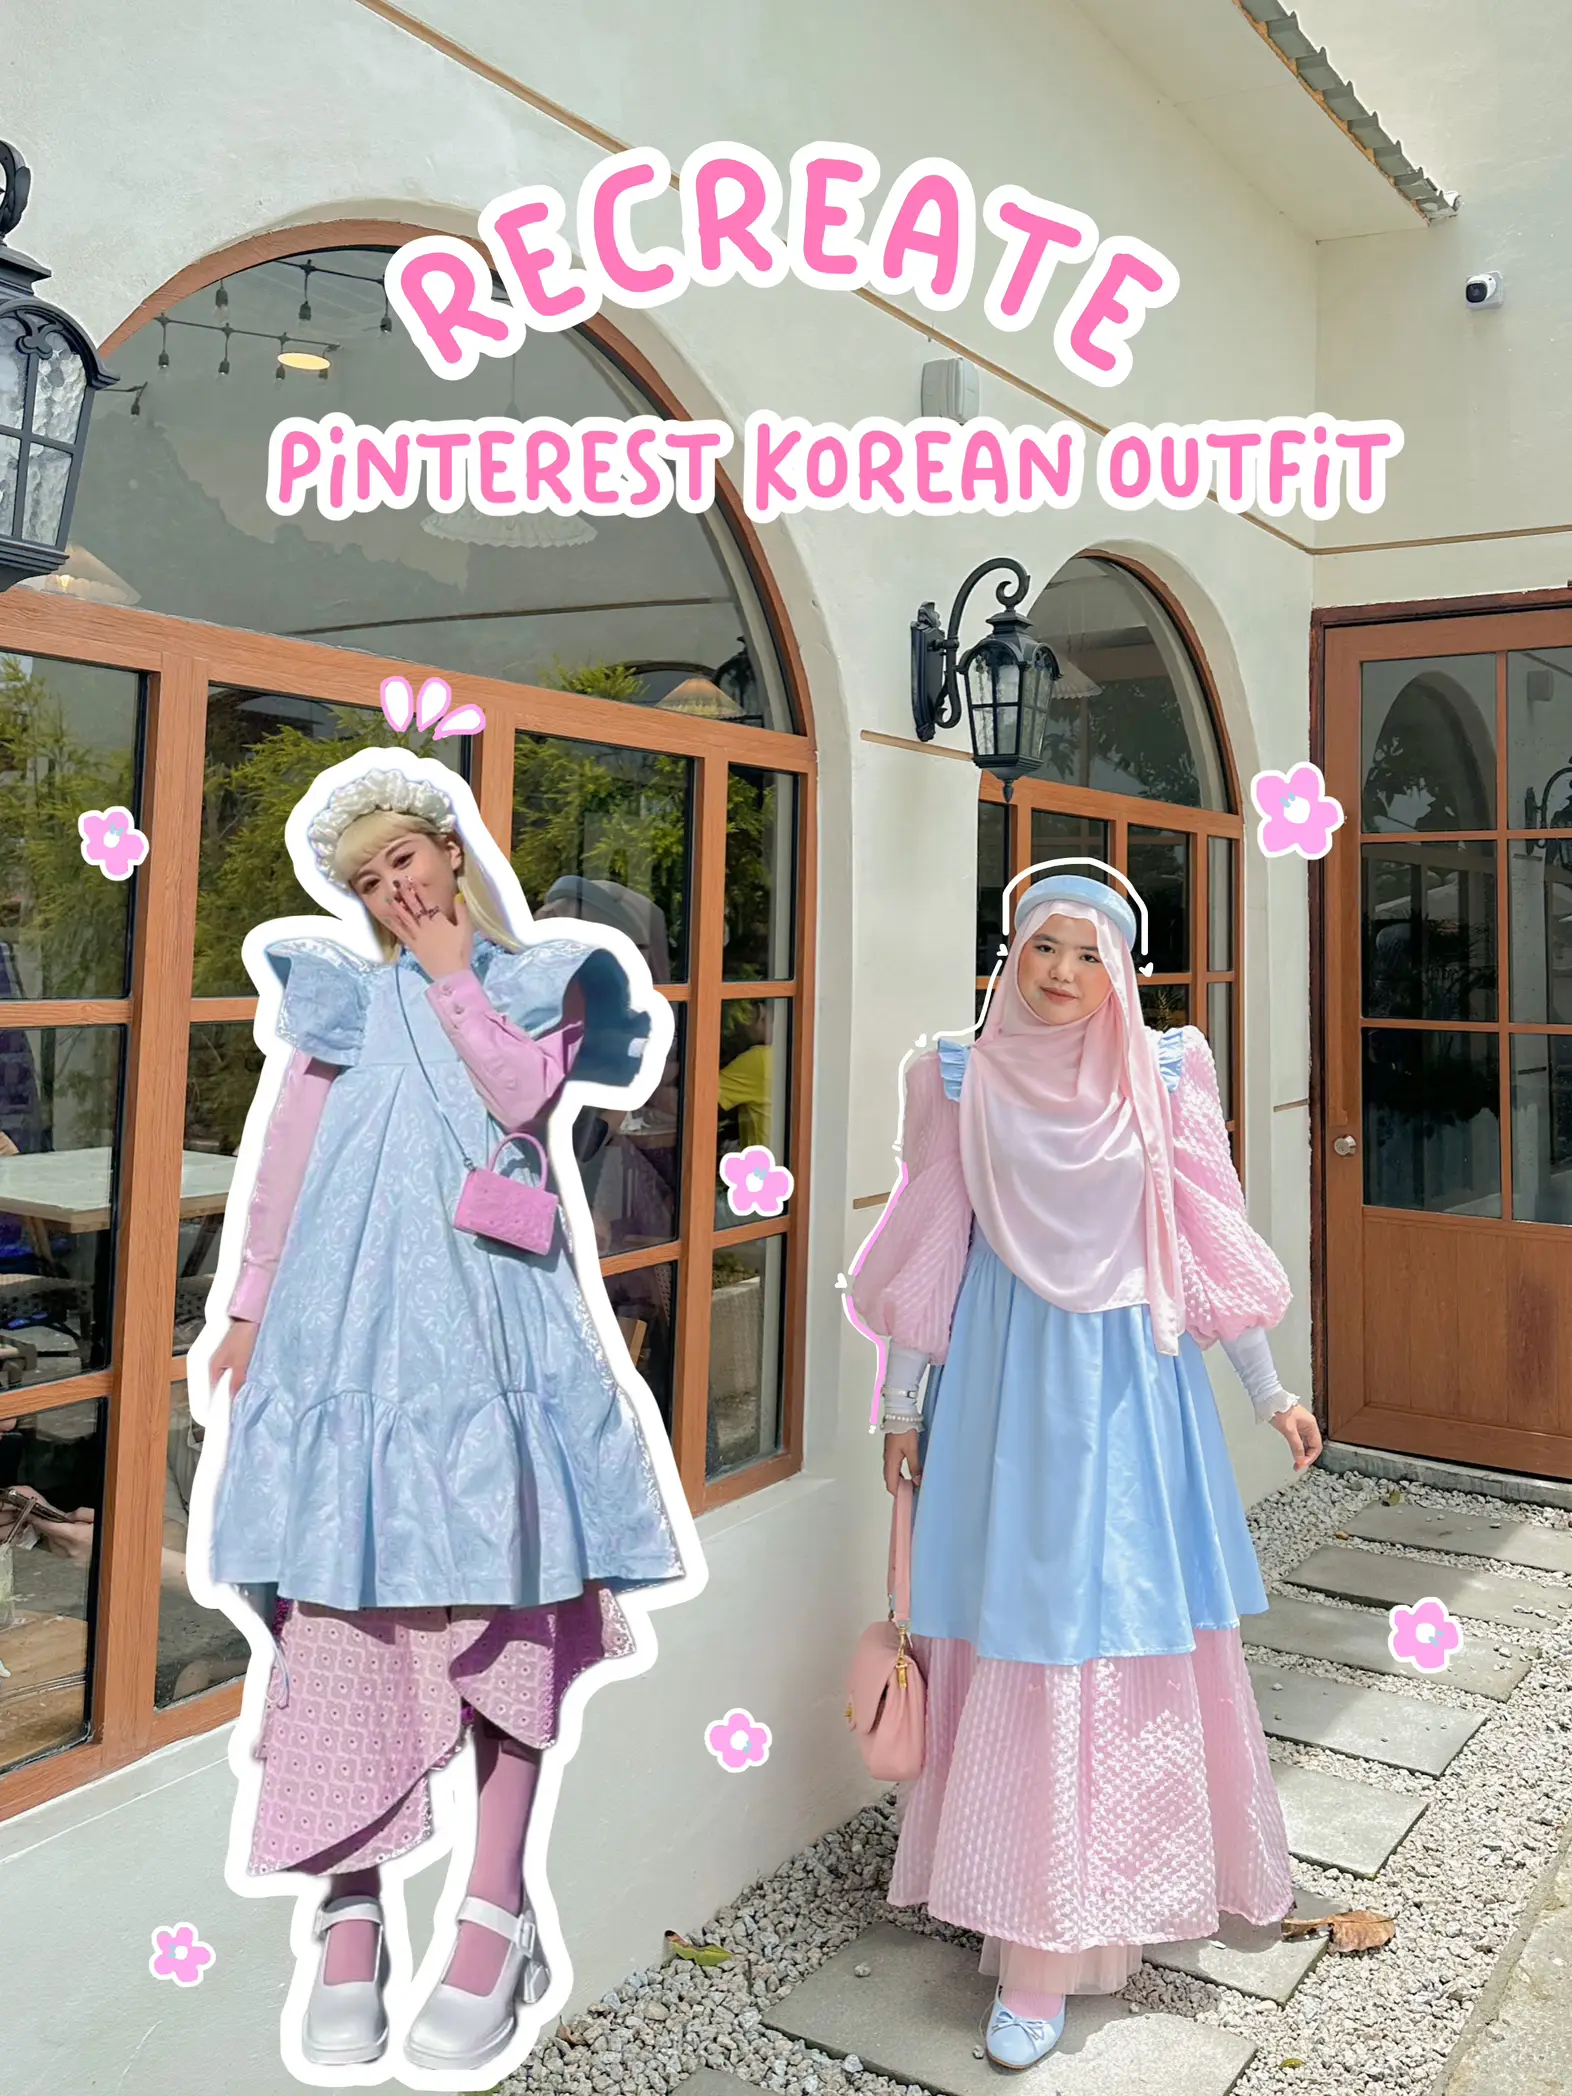 Recreate this cute korean outfit from Pinterest!, Galeri disiarkan oleh  Hakak Silau